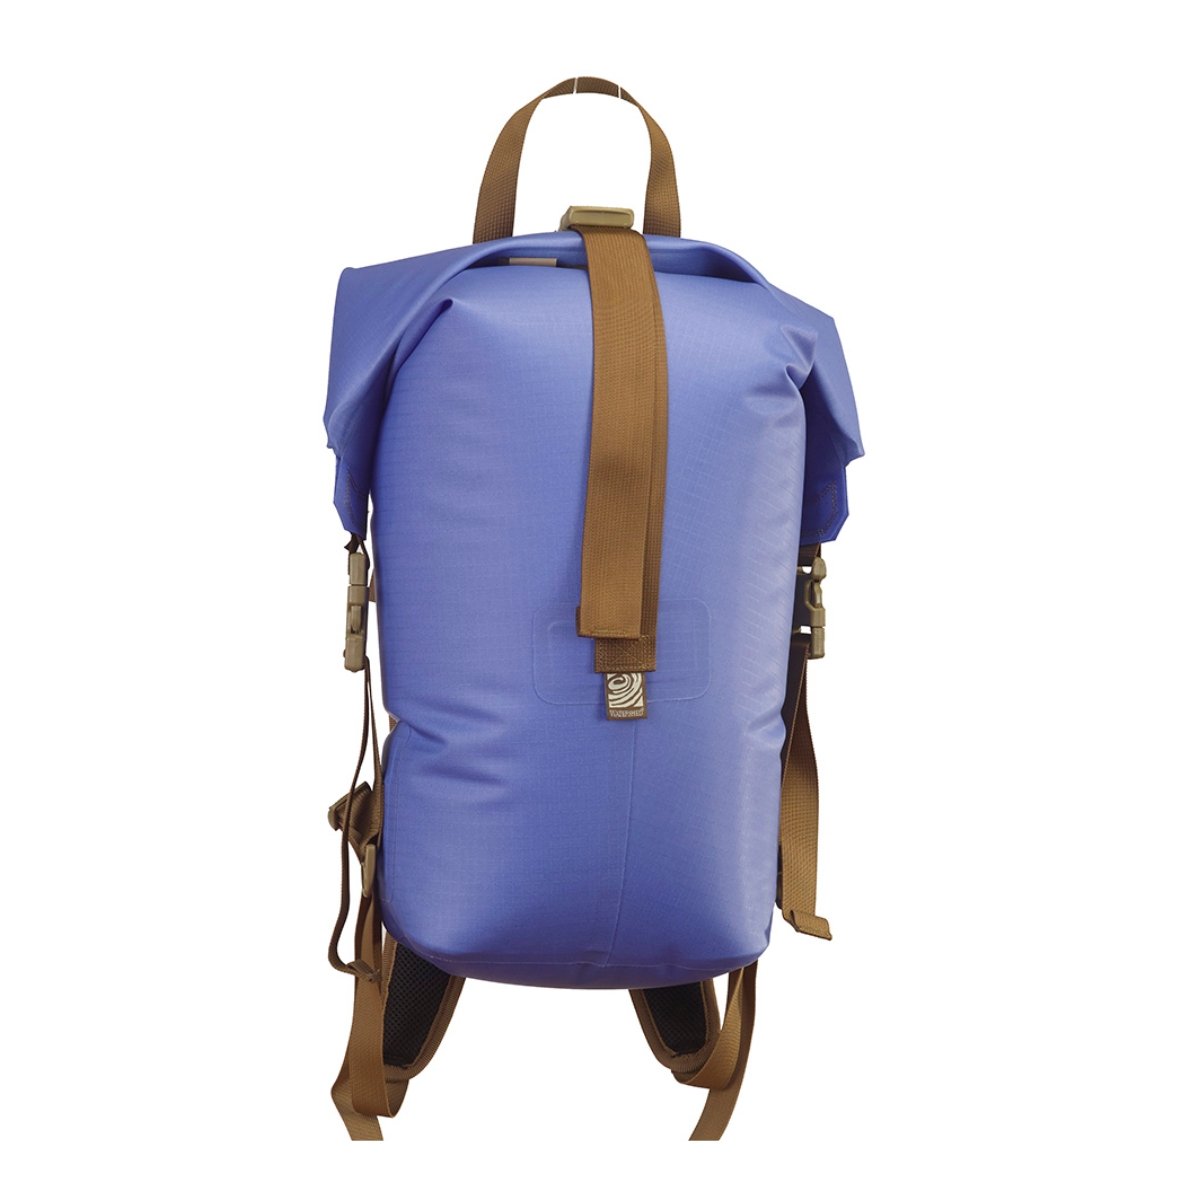 Big Creek backpack - 20 Litres - Dry Bags